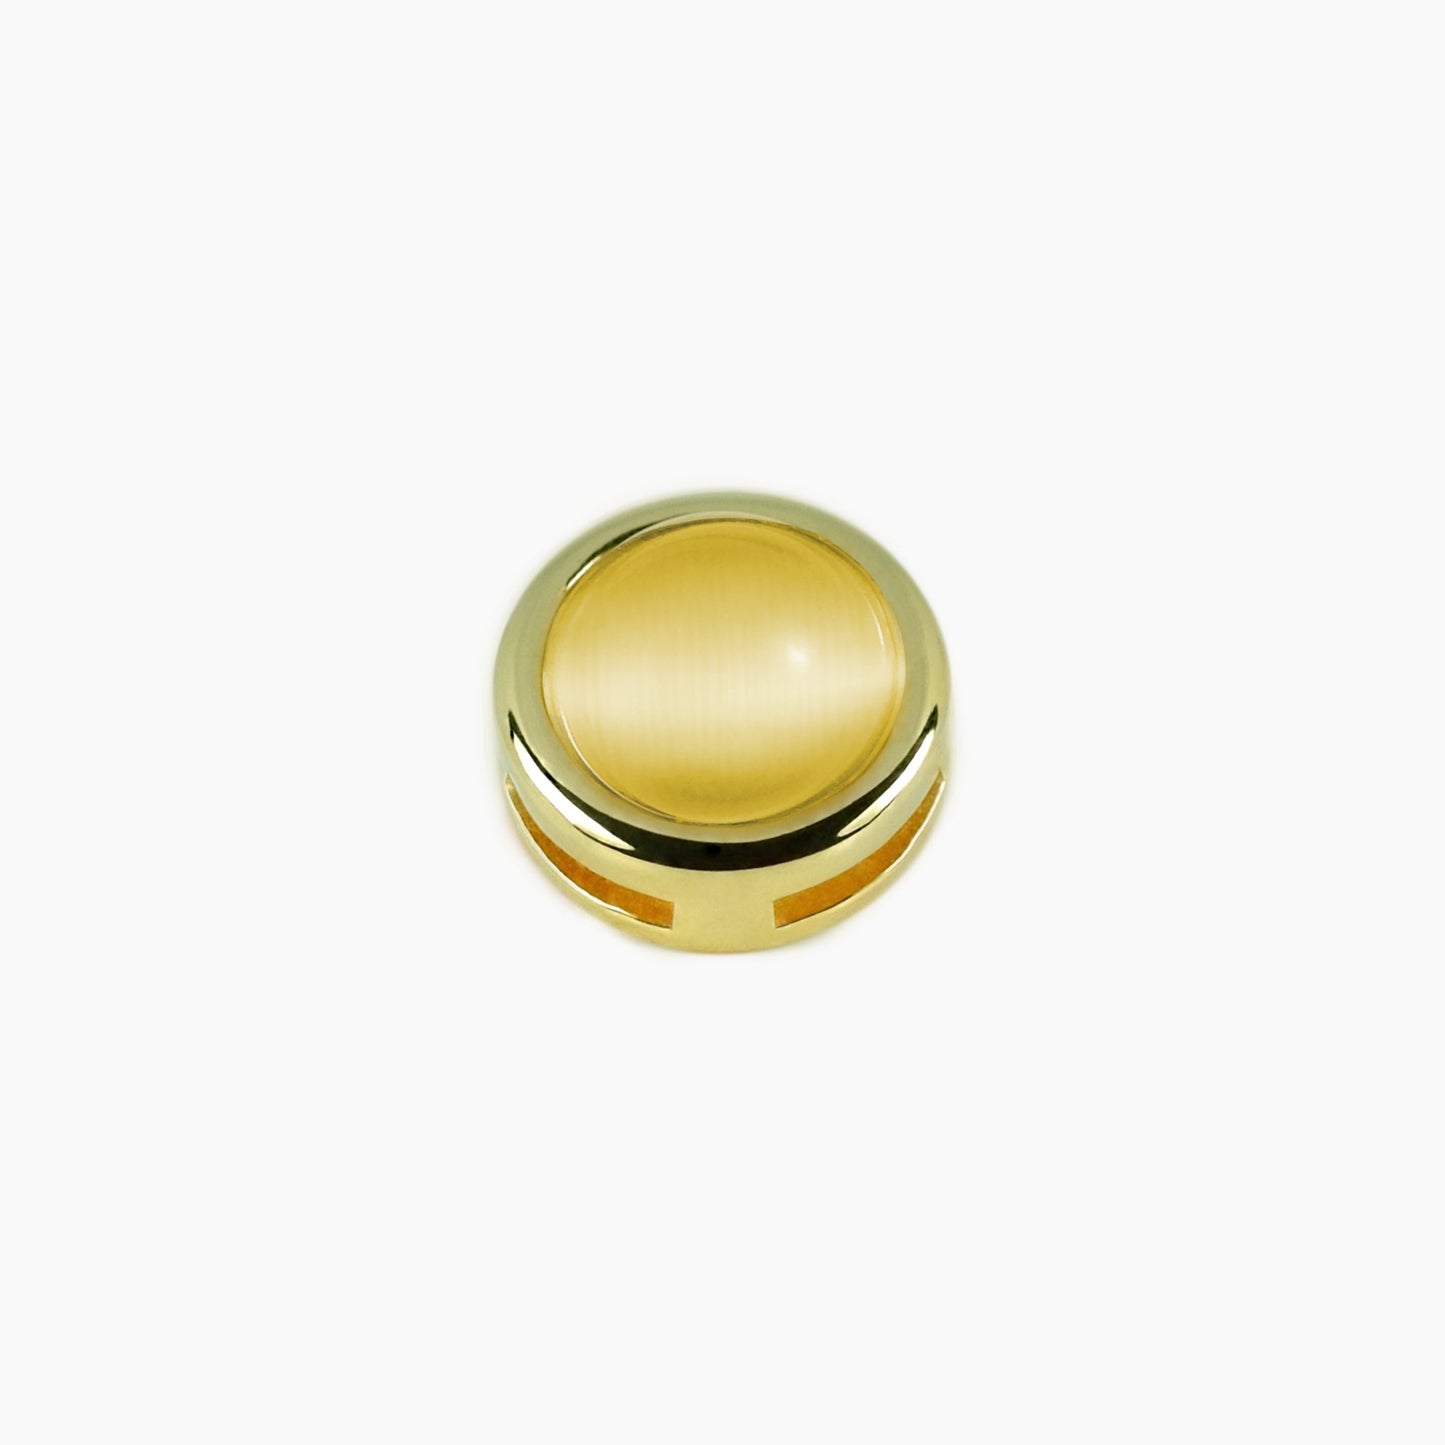 Pin Jelly Moon - Sterlingsilber mit Gold Auflage - Cabochon - Schraubmechanik